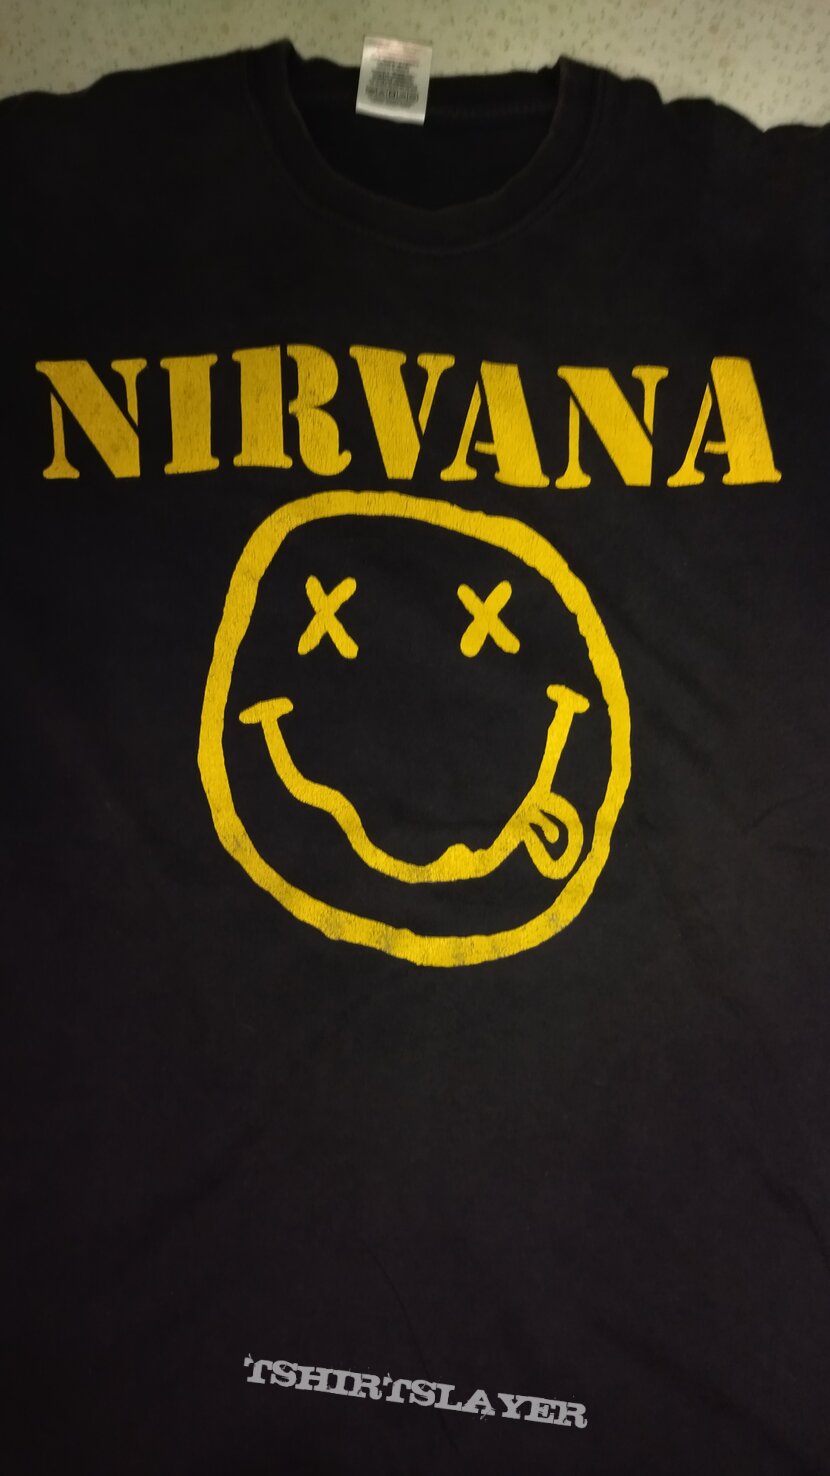 Nirvana merch